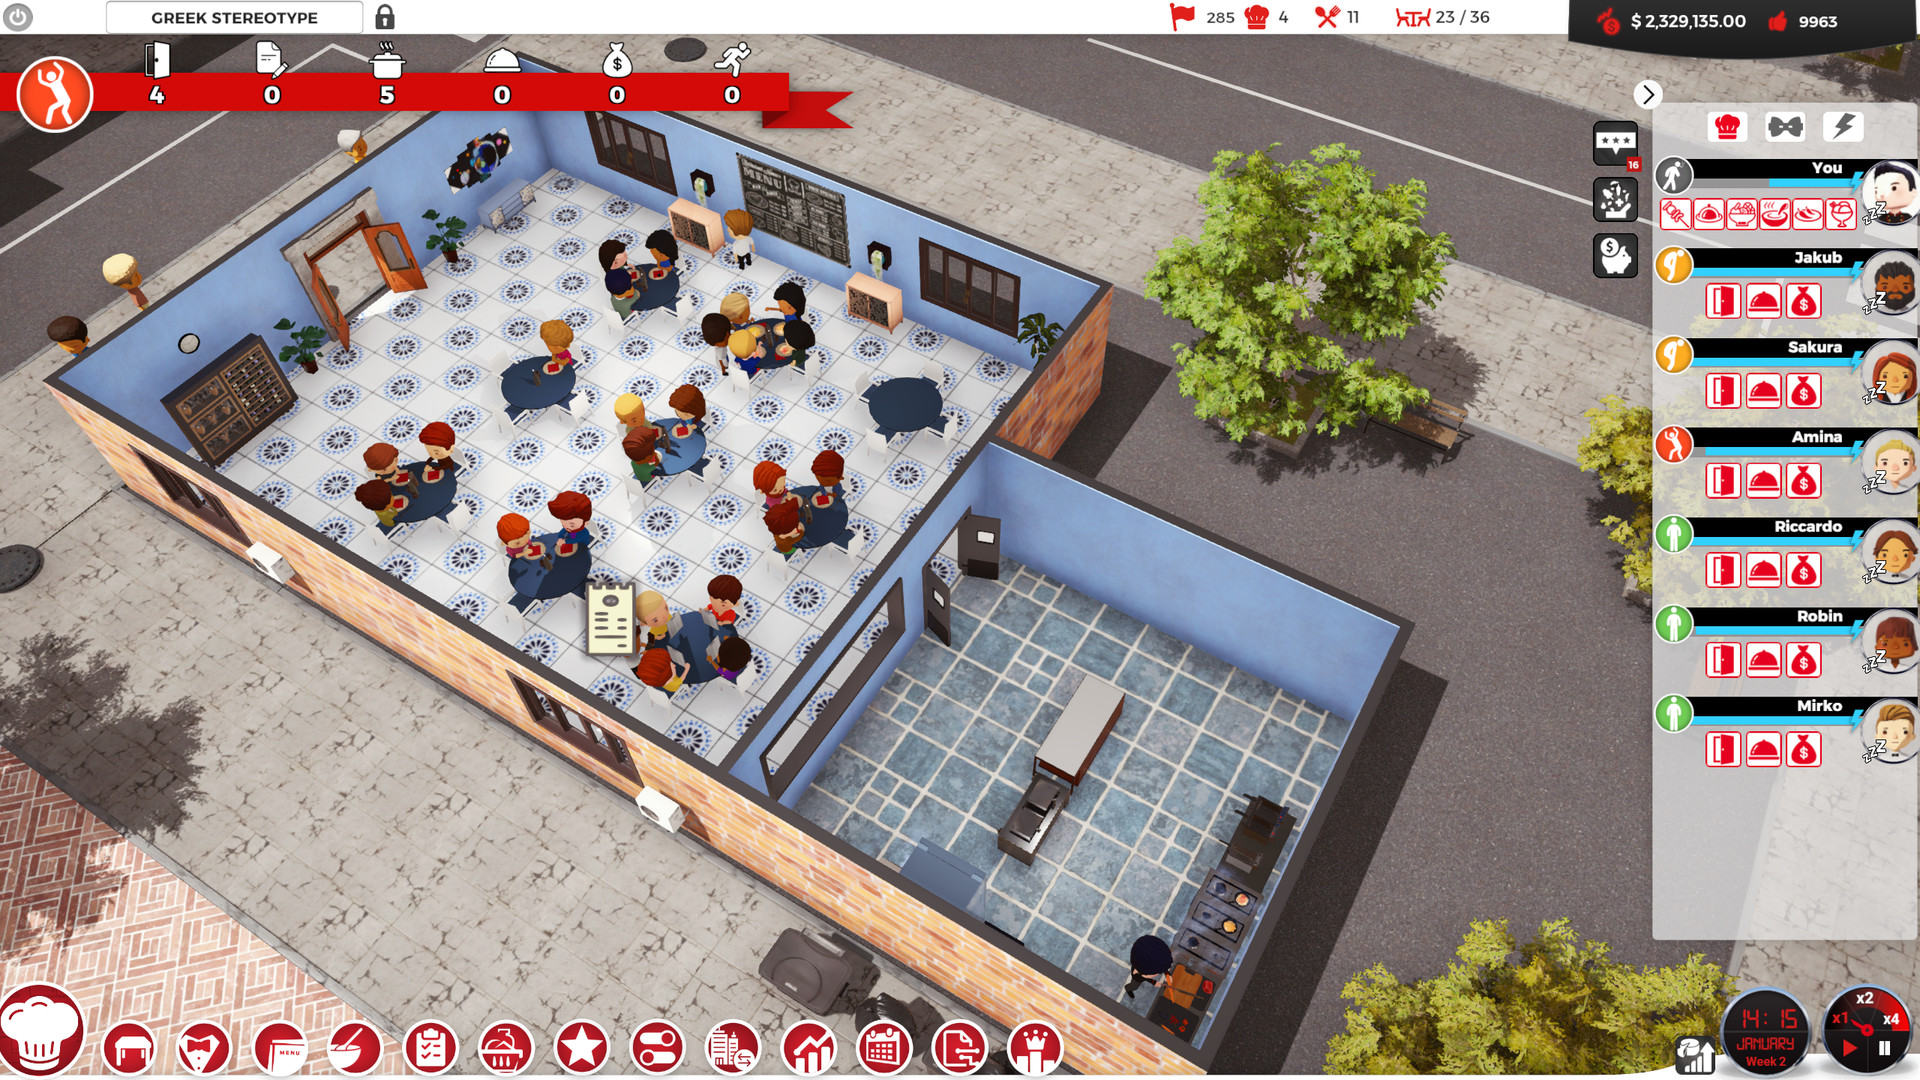 Chef A Restaurant Tycoon Game On Steam - roblox restaurant tycoon wallpaper